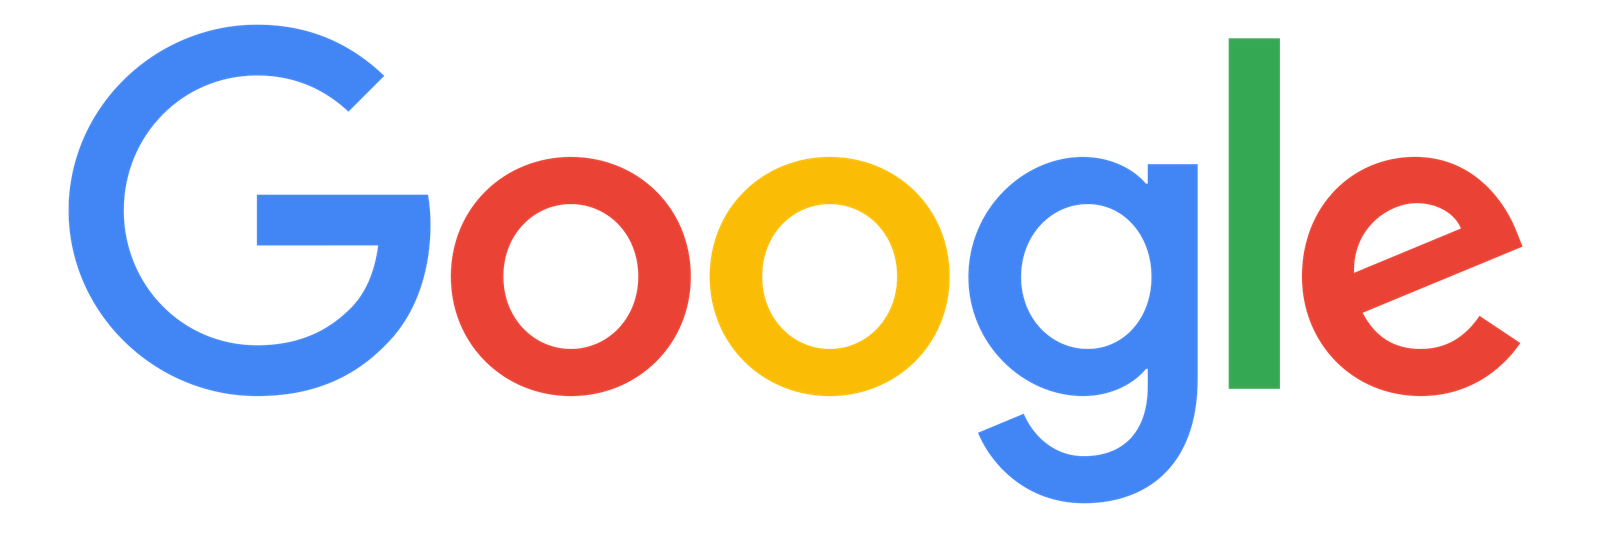 google-logo-transparent